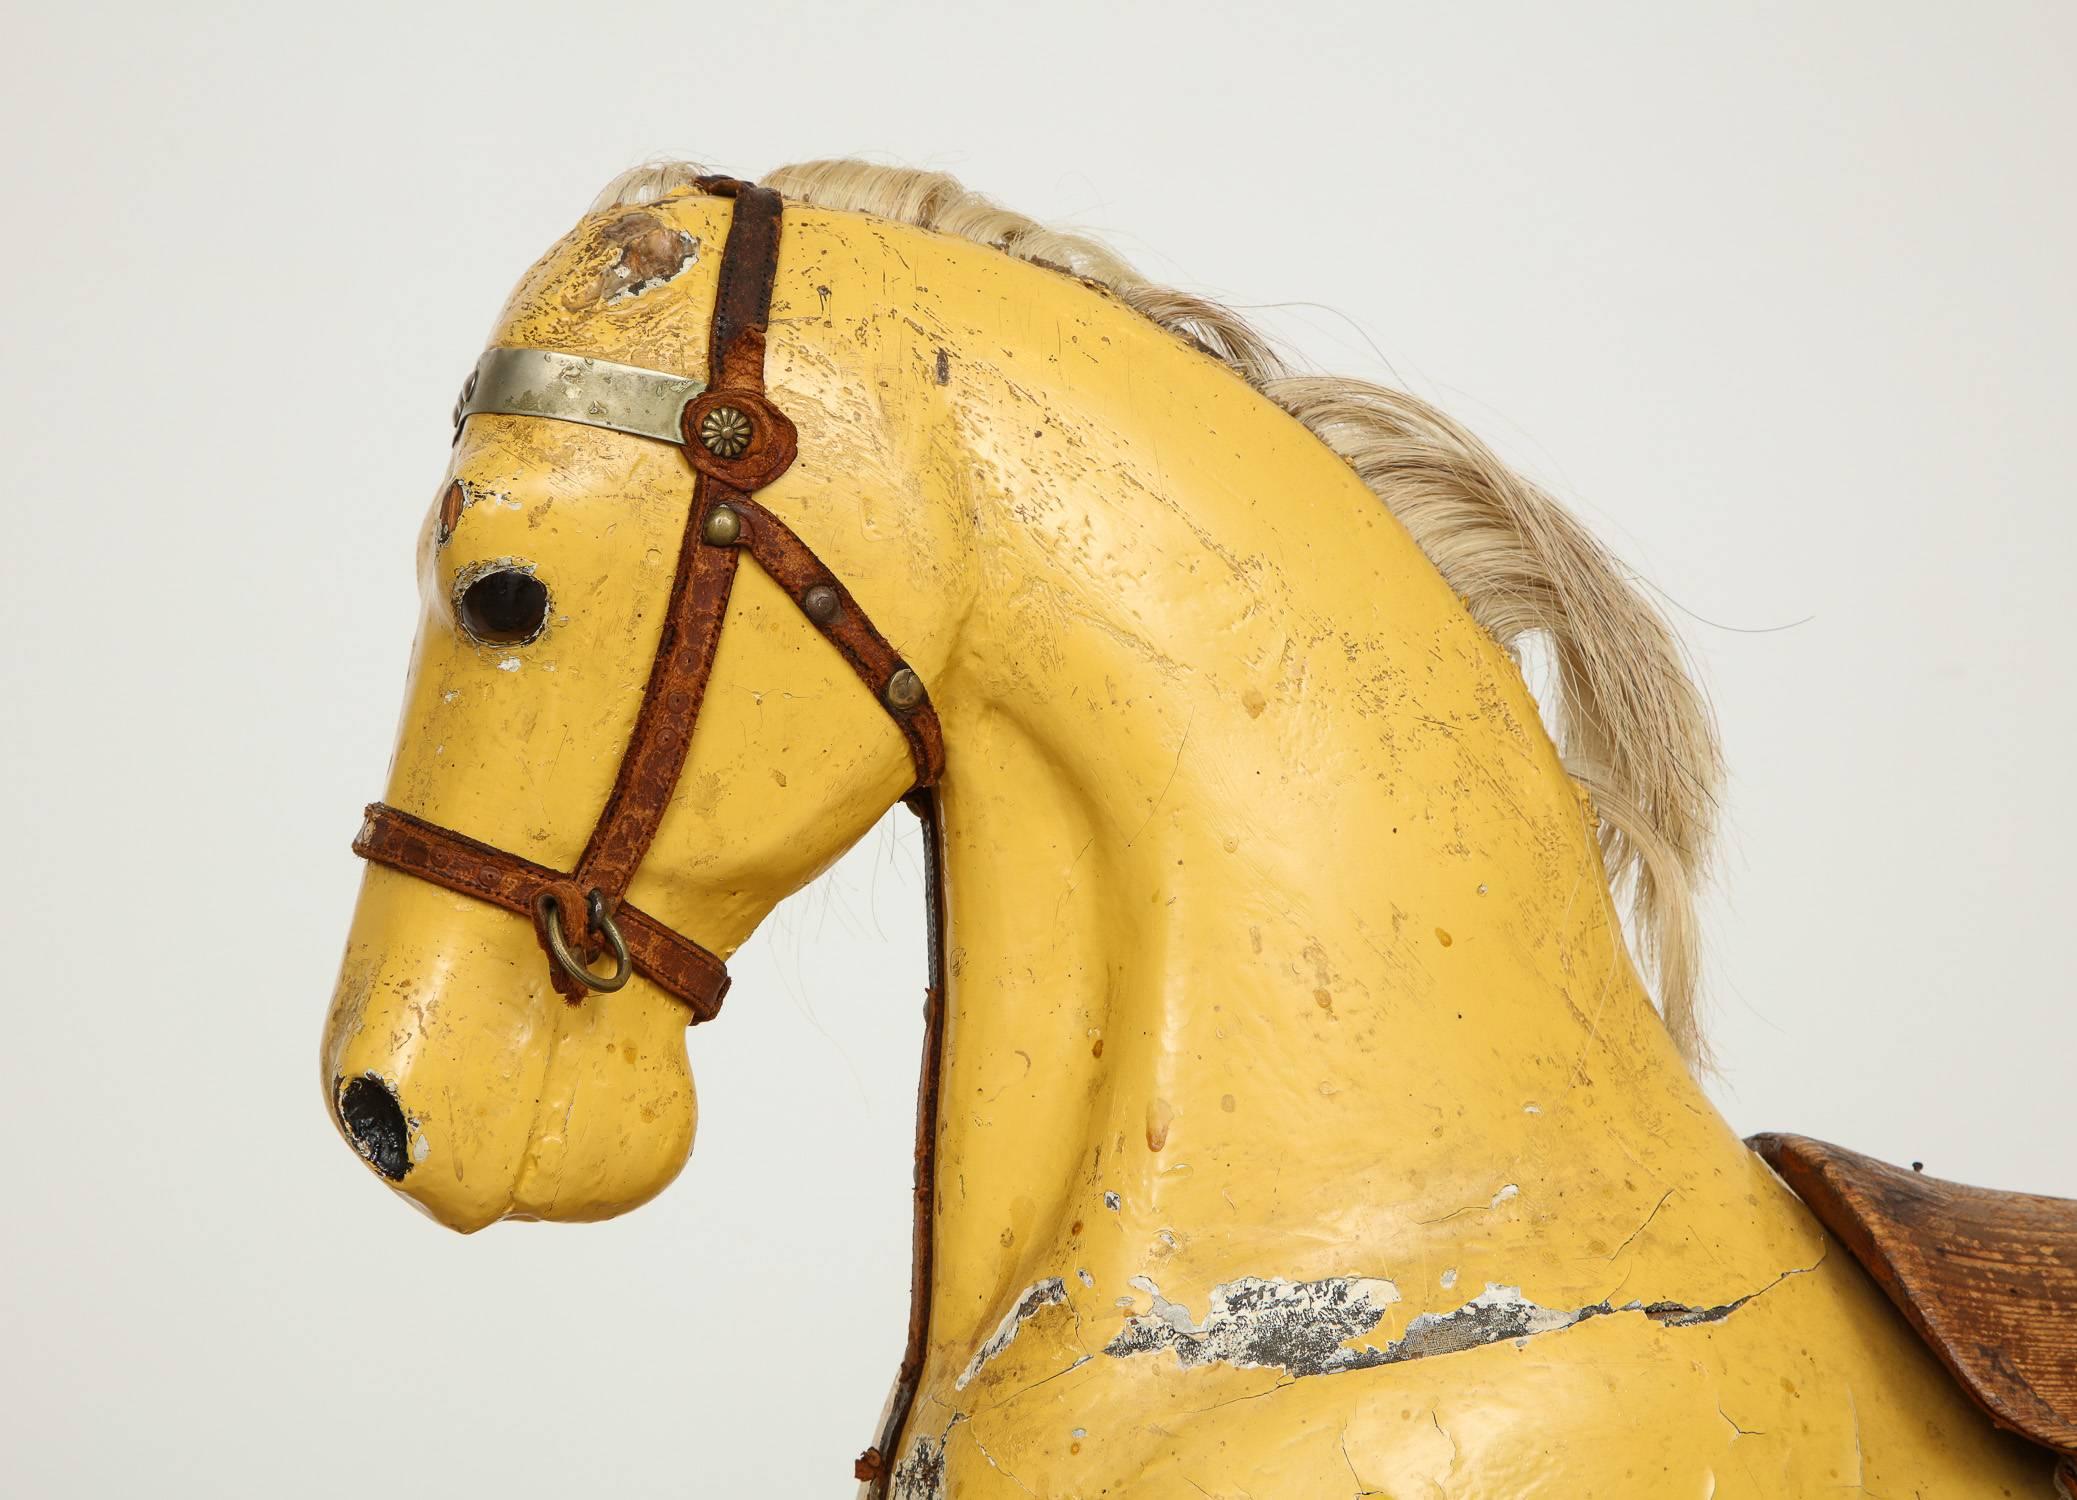 Folk Art Swedish Antique Toy Rocking Horse, All Original, Origin: Sweden, circa 1870 For Sale